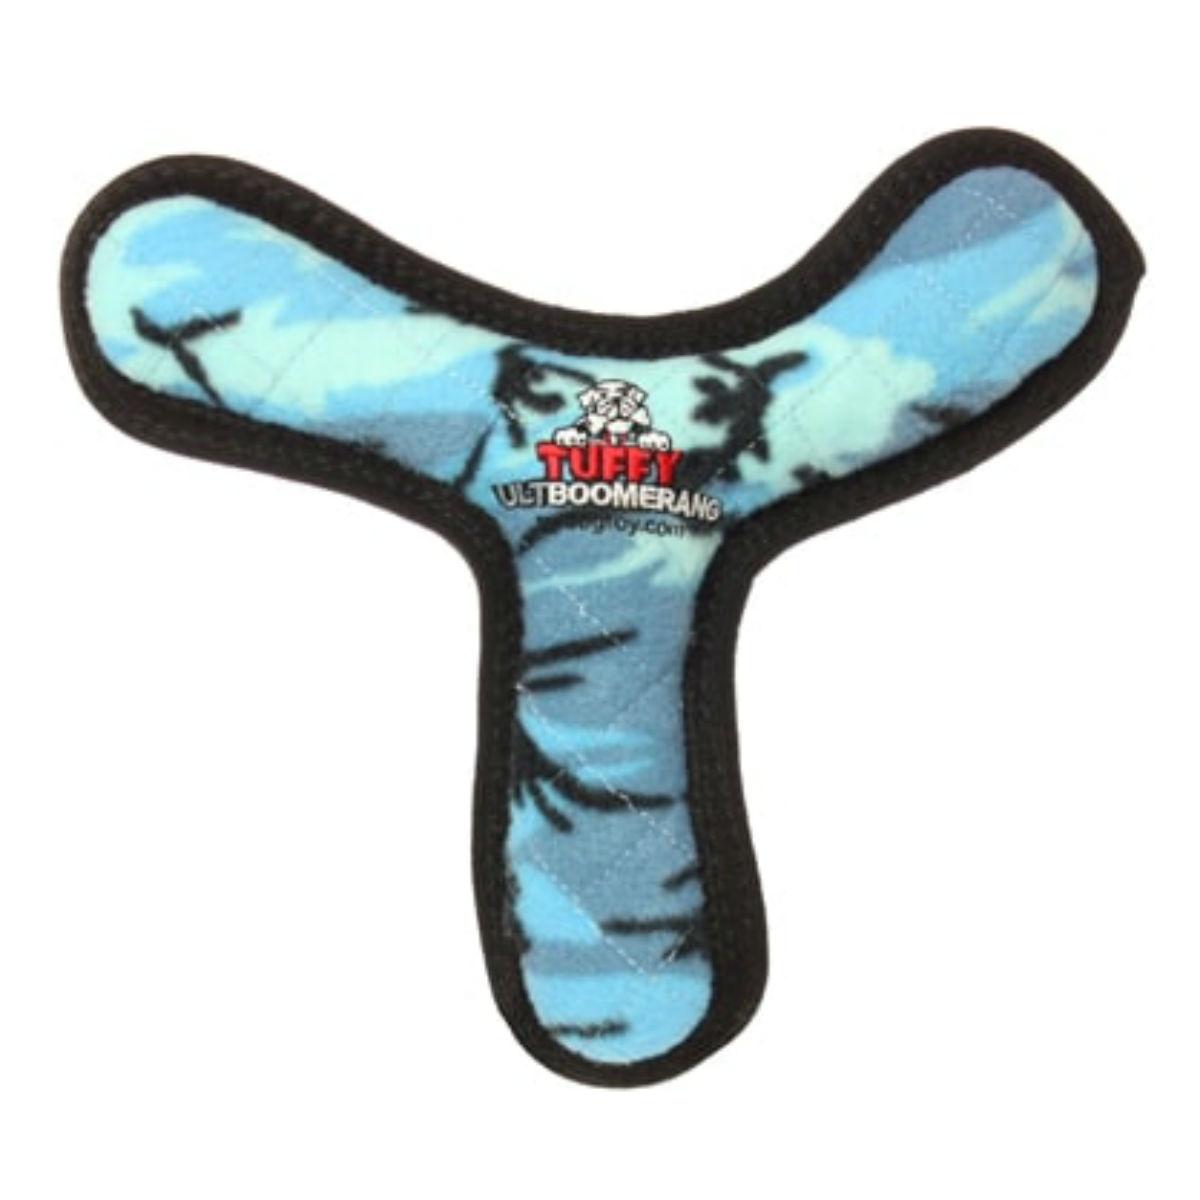 Tuffy Ultimate Boomerang Dog Toy - Camo Blue